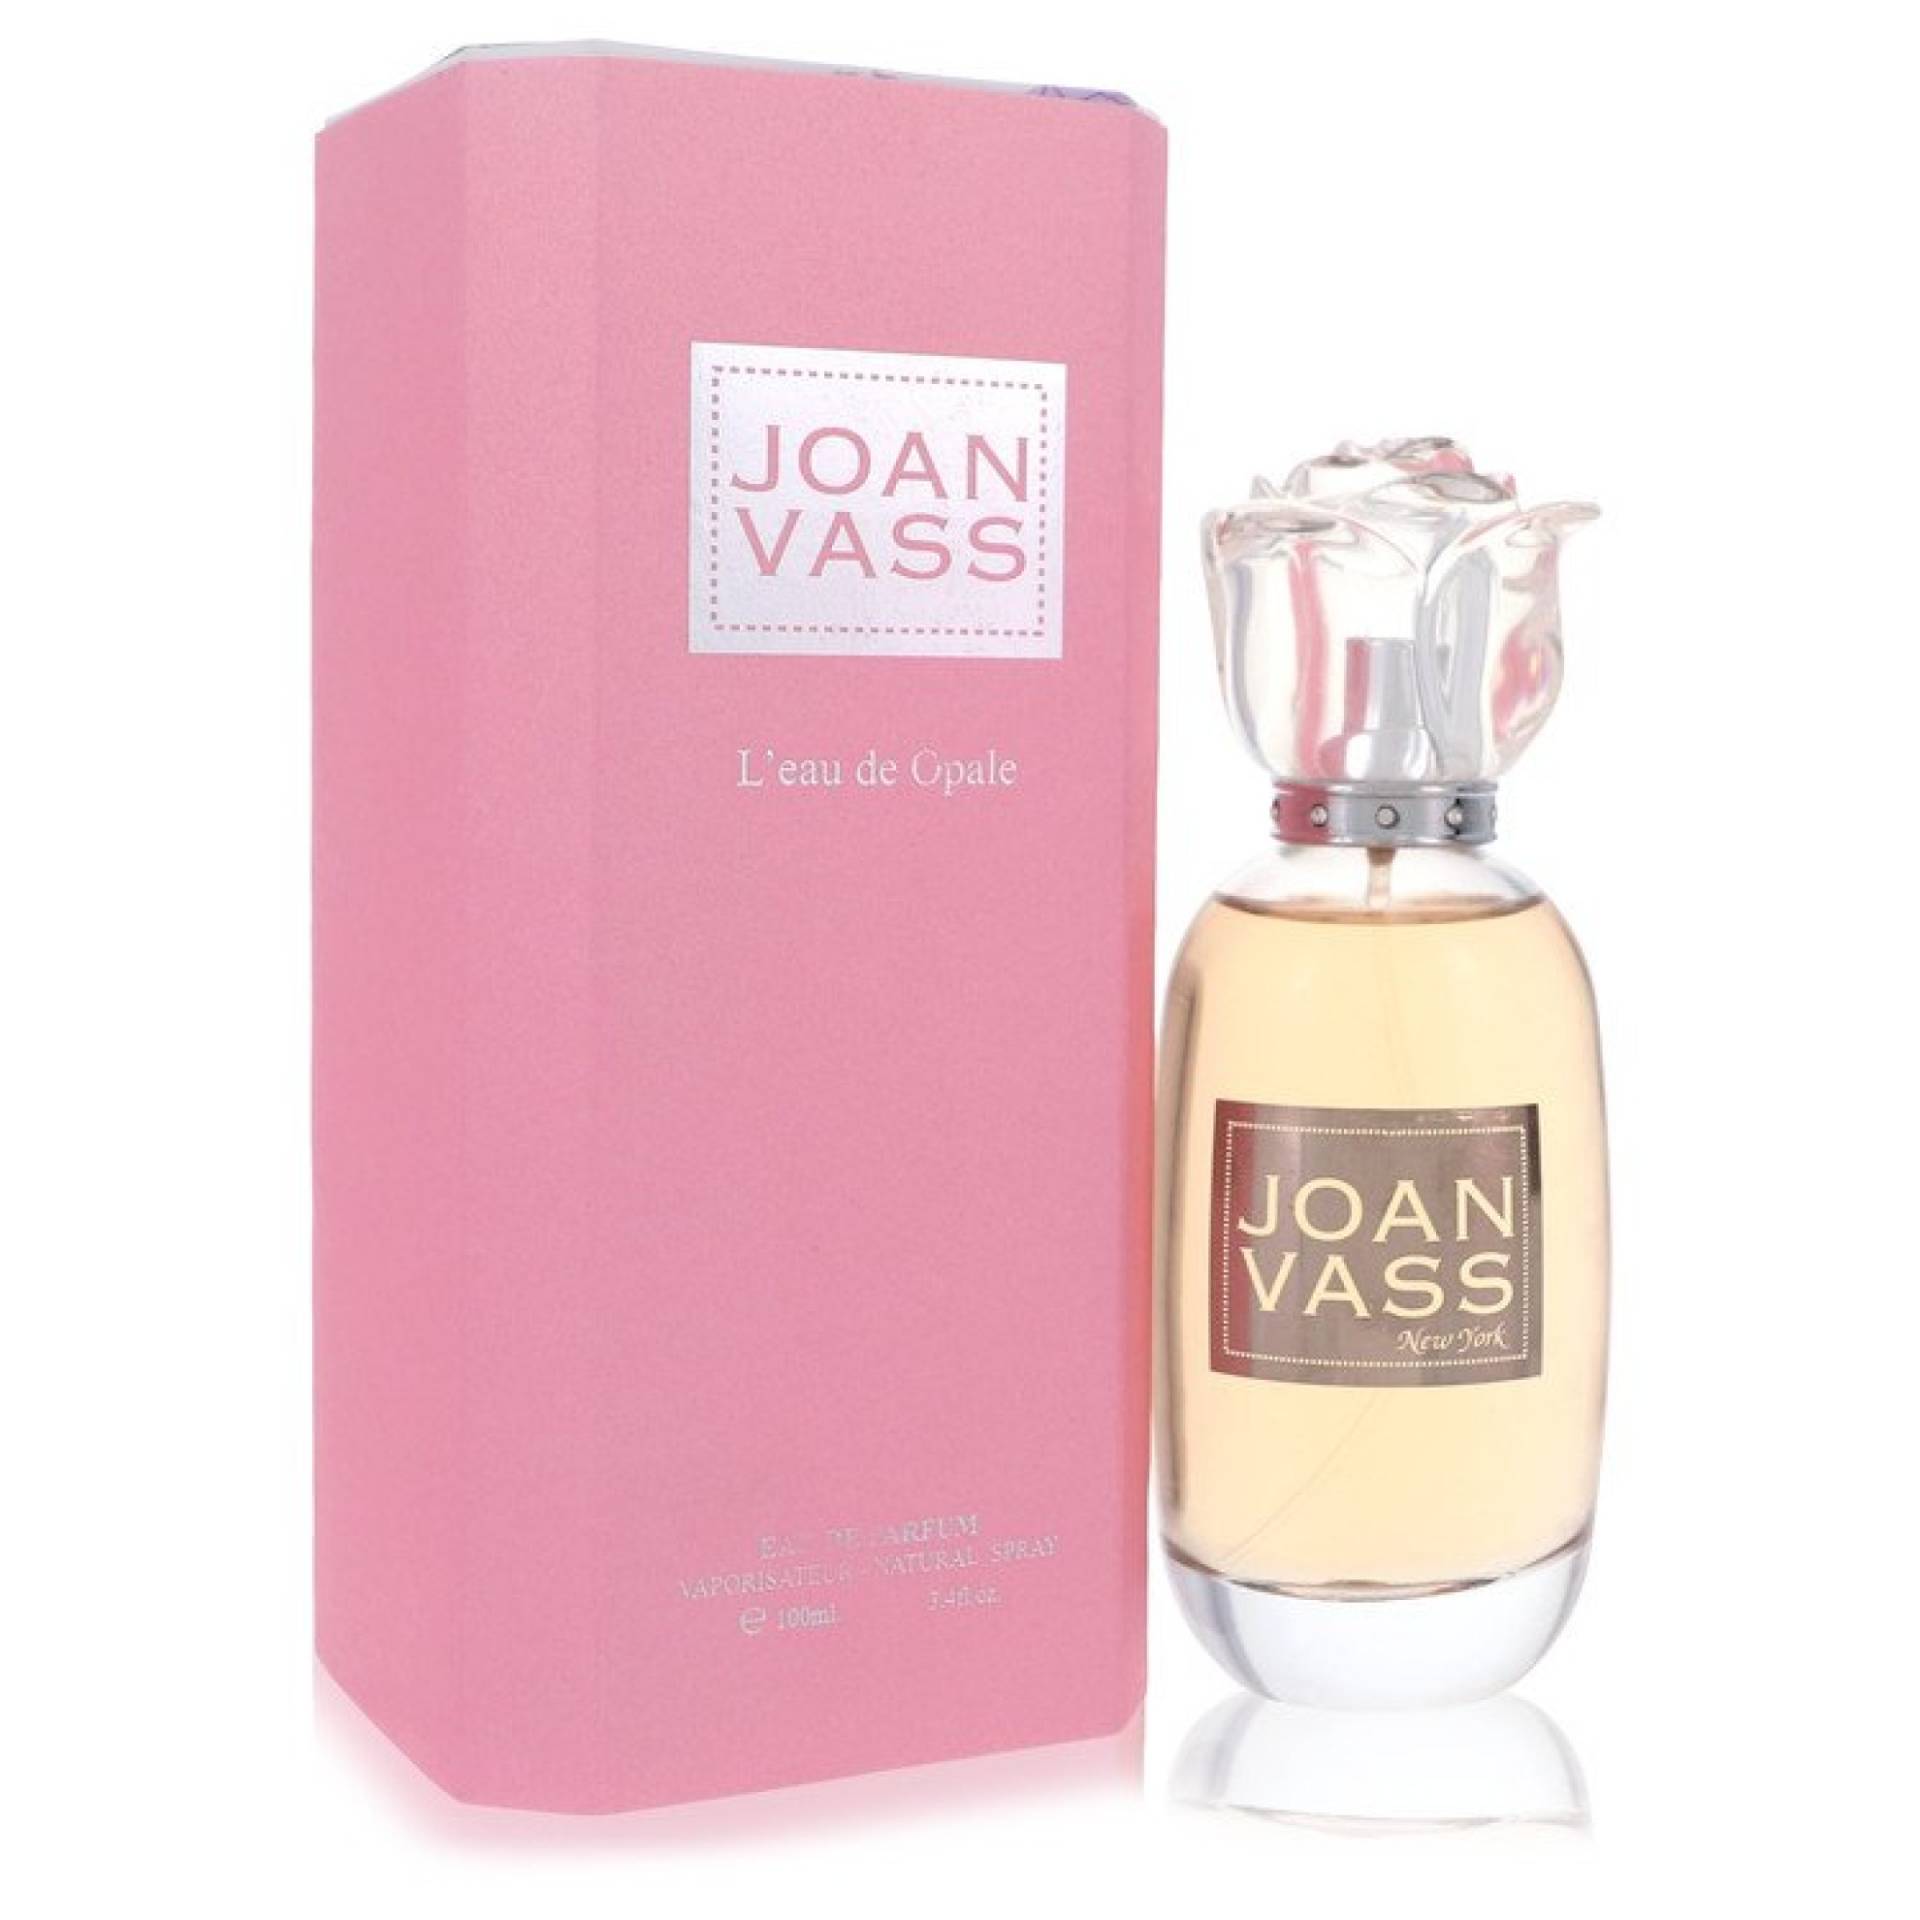 Joan Vass L'eau De Opale Eau De Parfum Spray 100 ml von Joan Vass